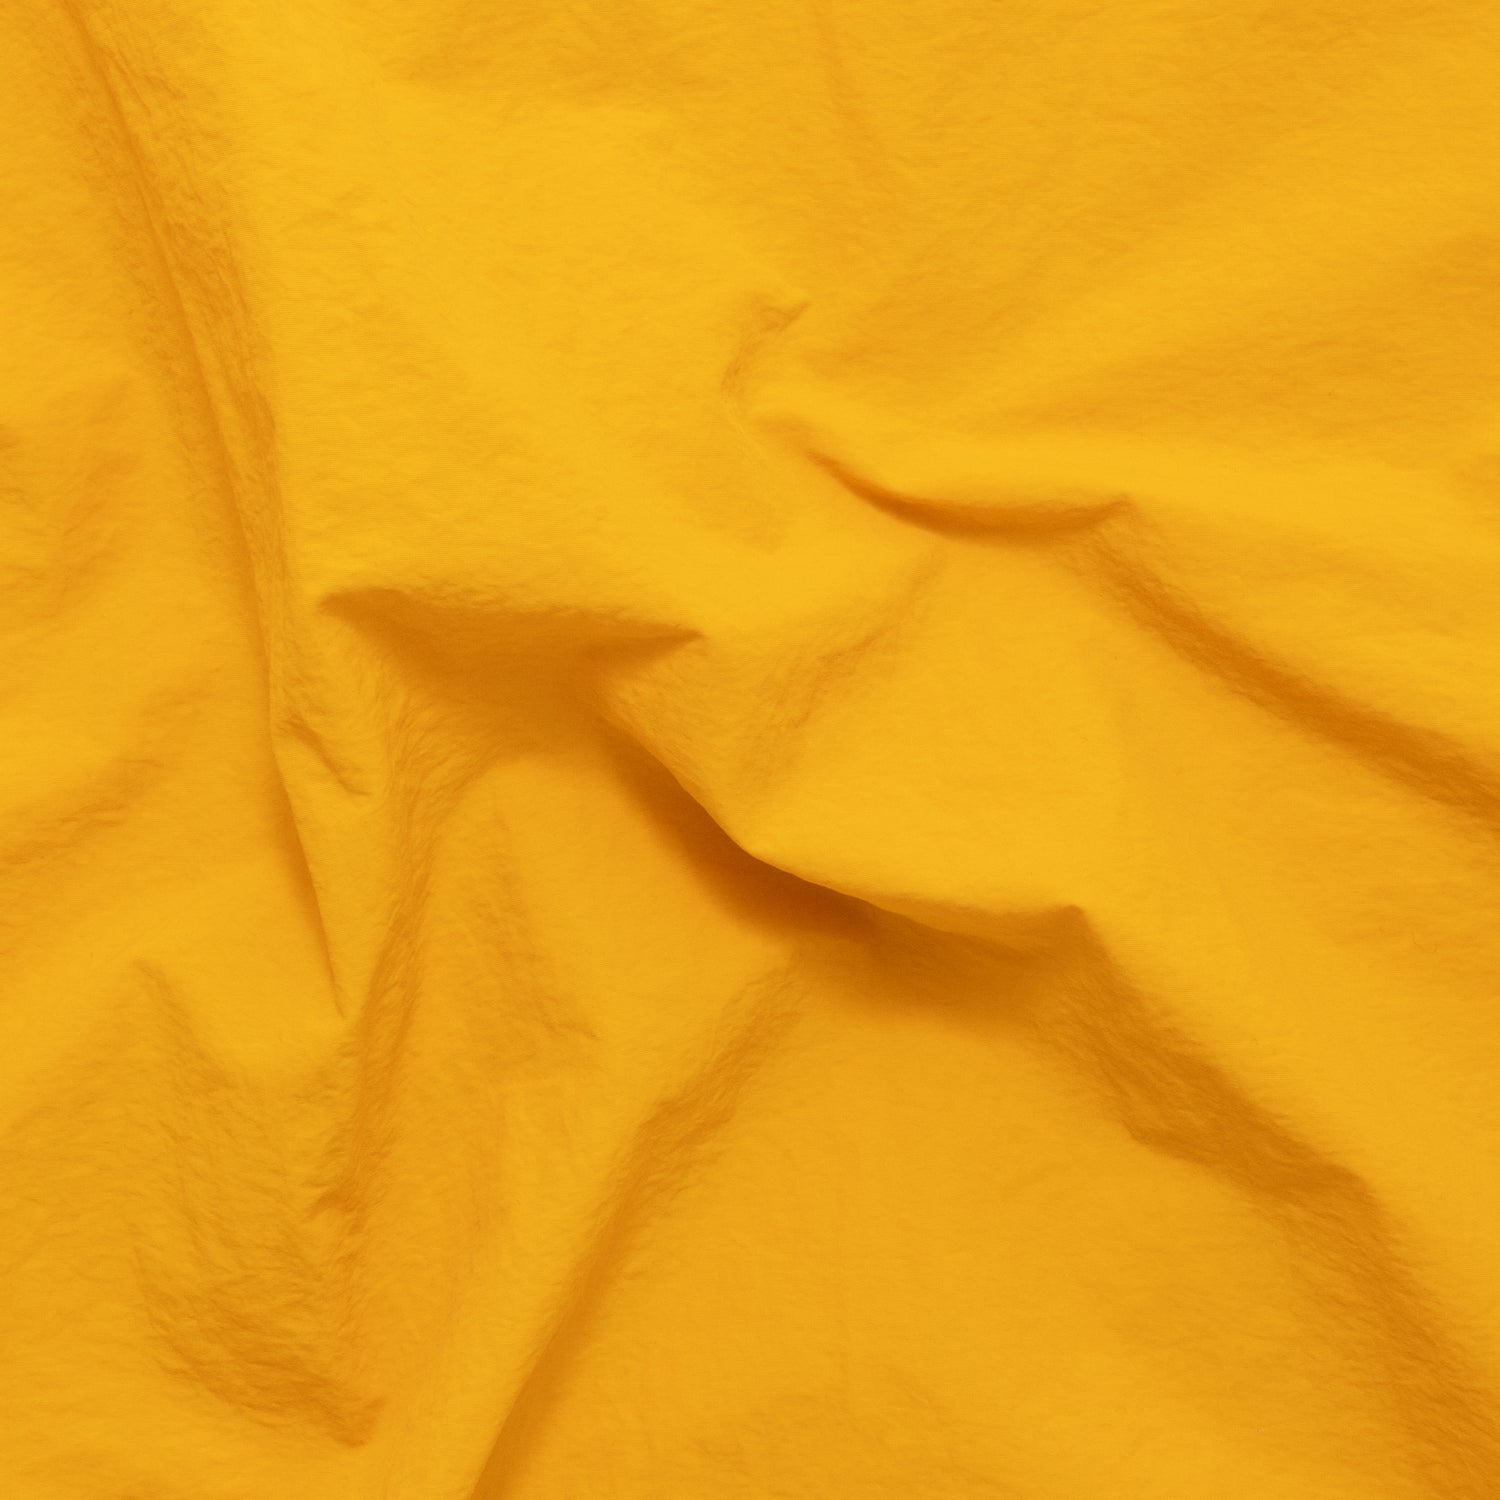 Waterproof Rain Jacket - Yellow